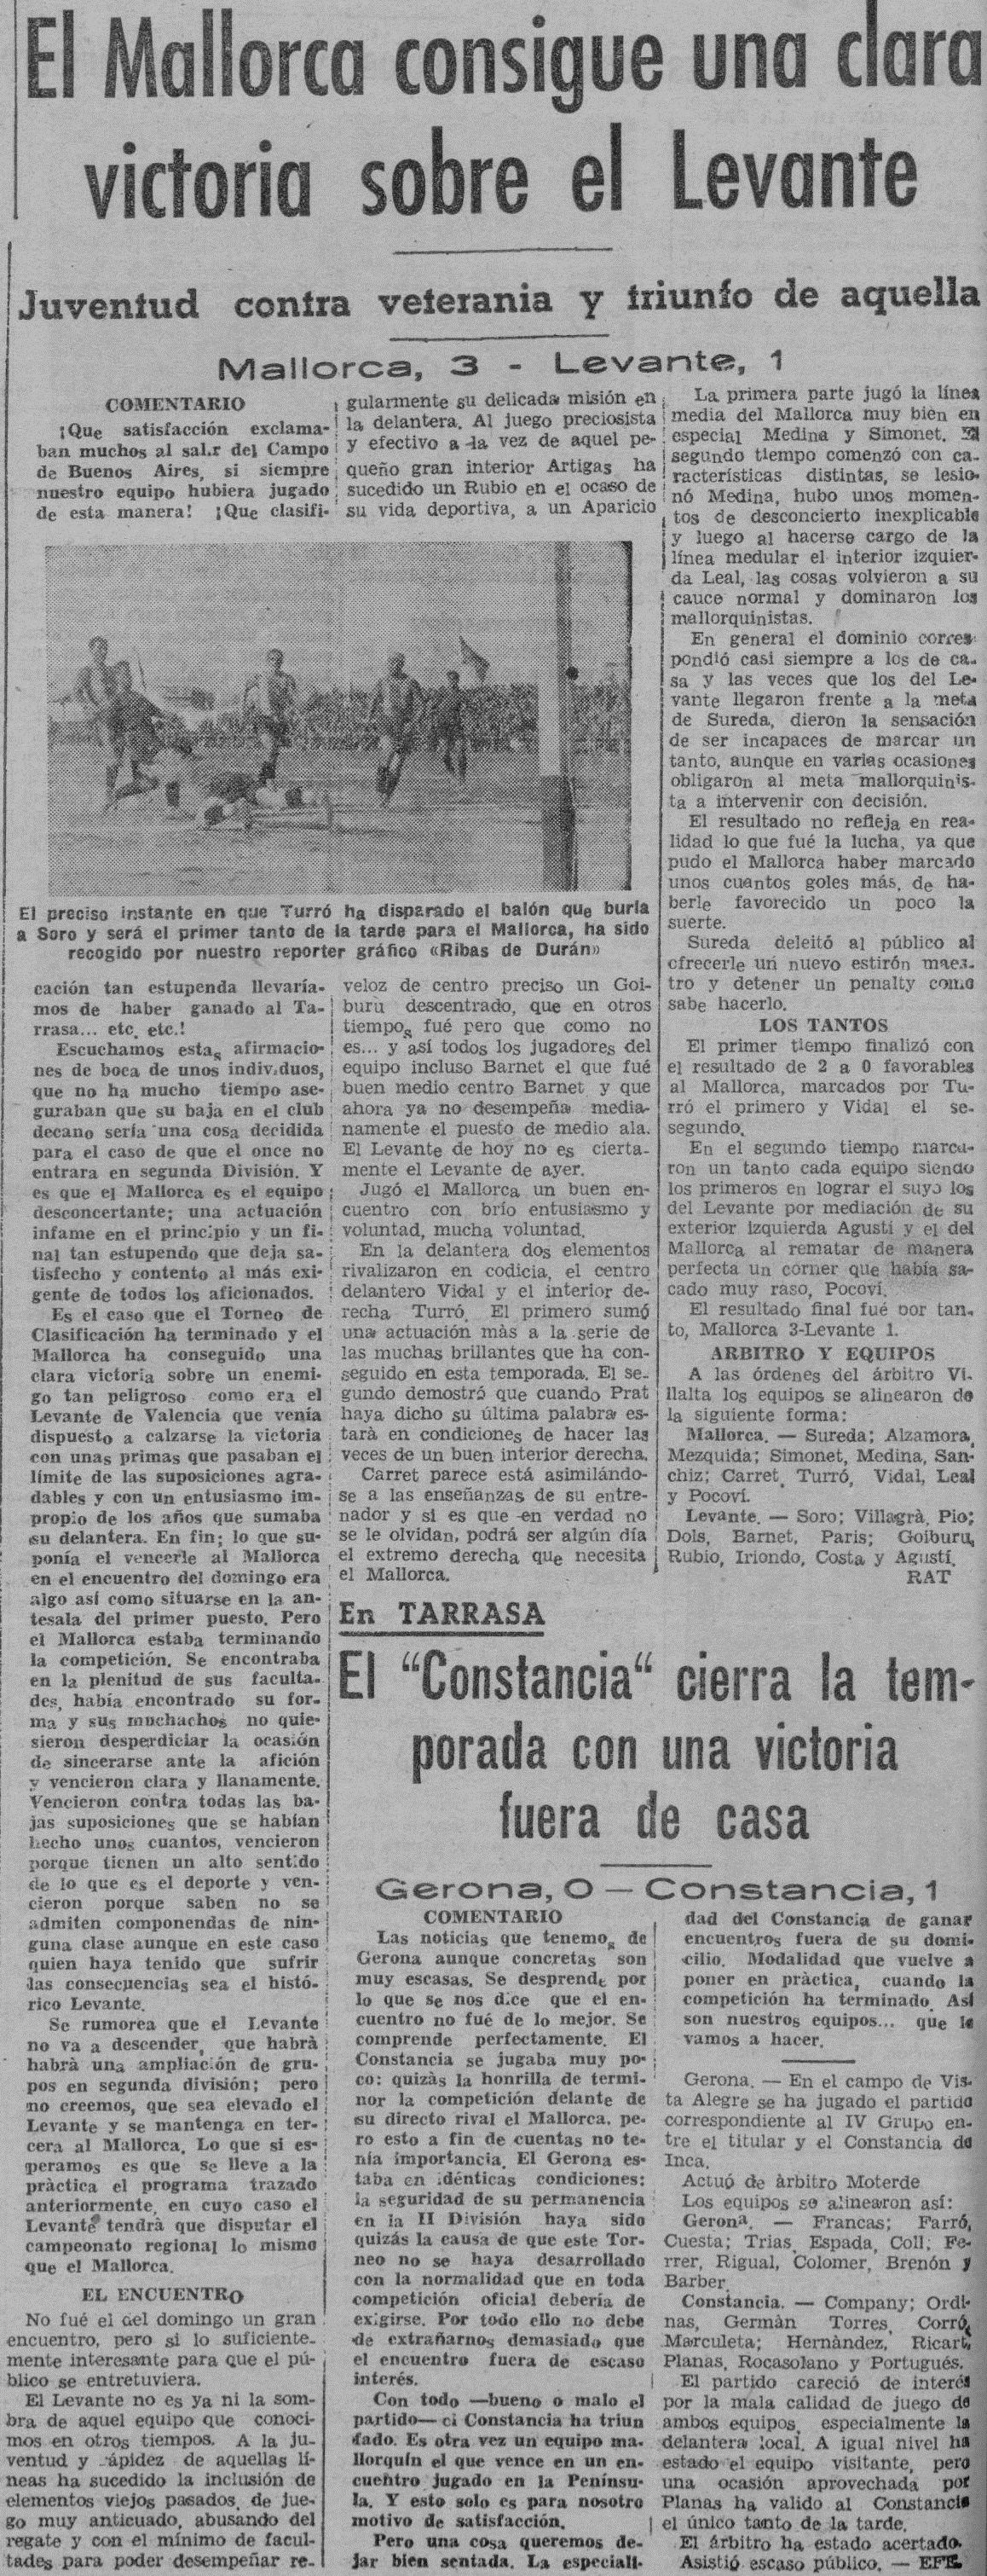 1942.04.05 (5 апреля 1942), Мальорка - Леванте, 3-1 (2).jpg